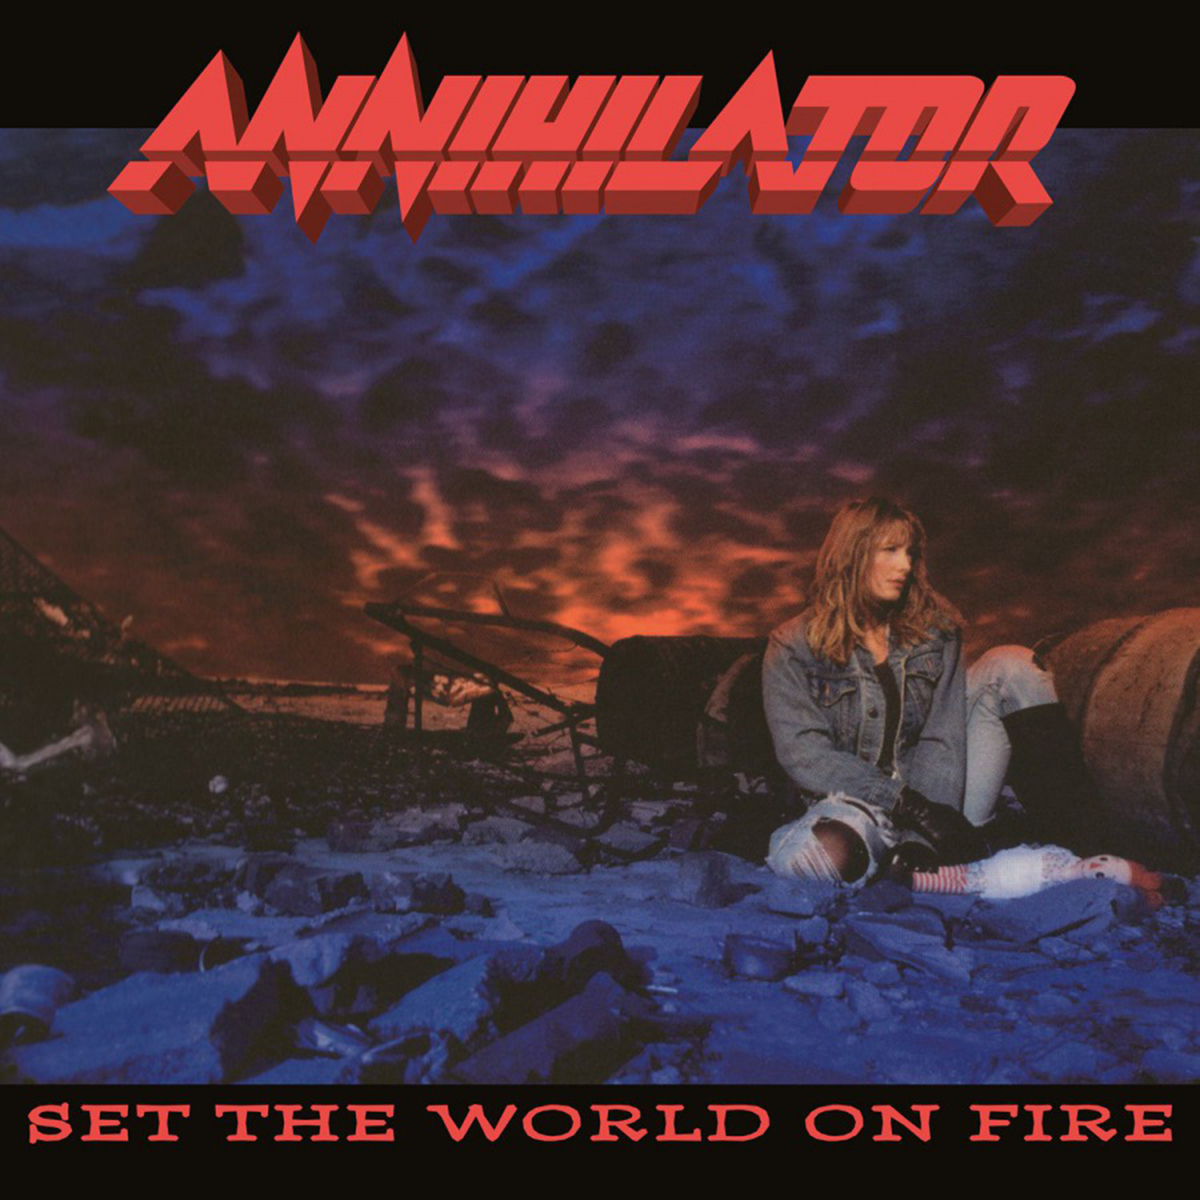 Виниловая пластинка Annihilator, Set The World On Fire (8719262028272) цена и фото